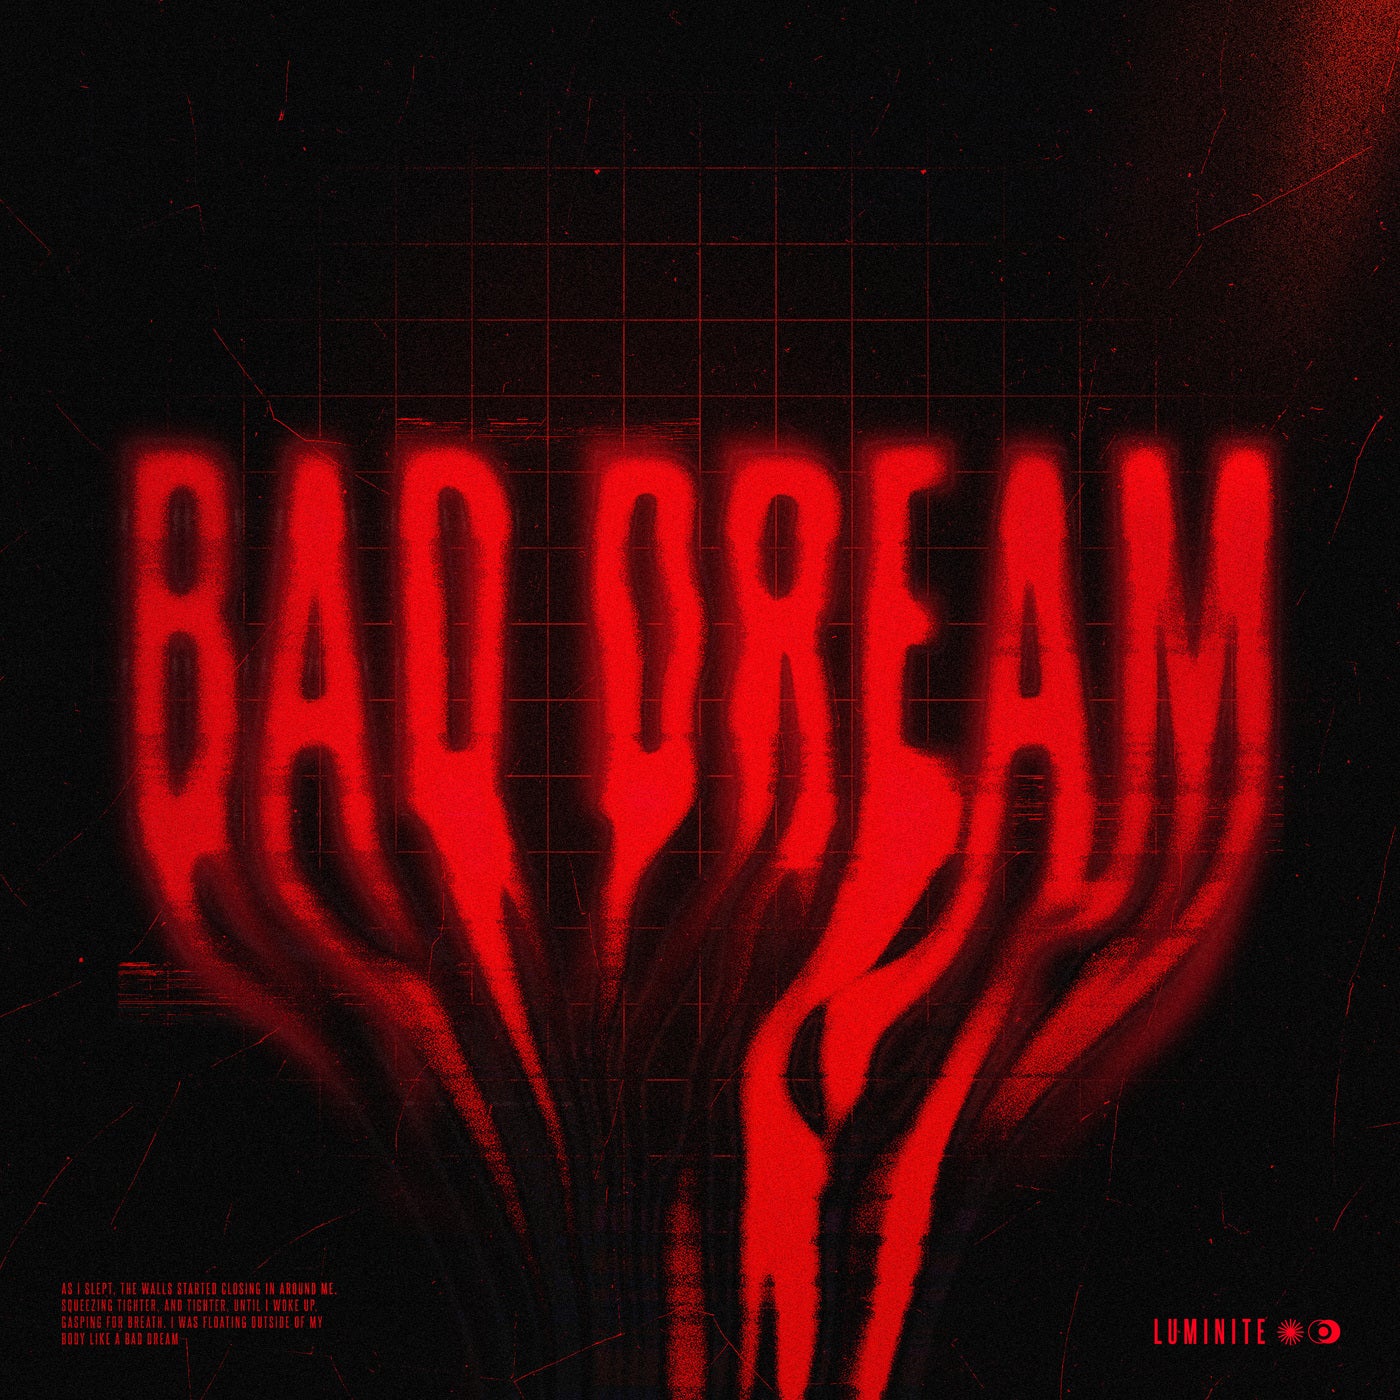 Bad Dream - Pro Mix